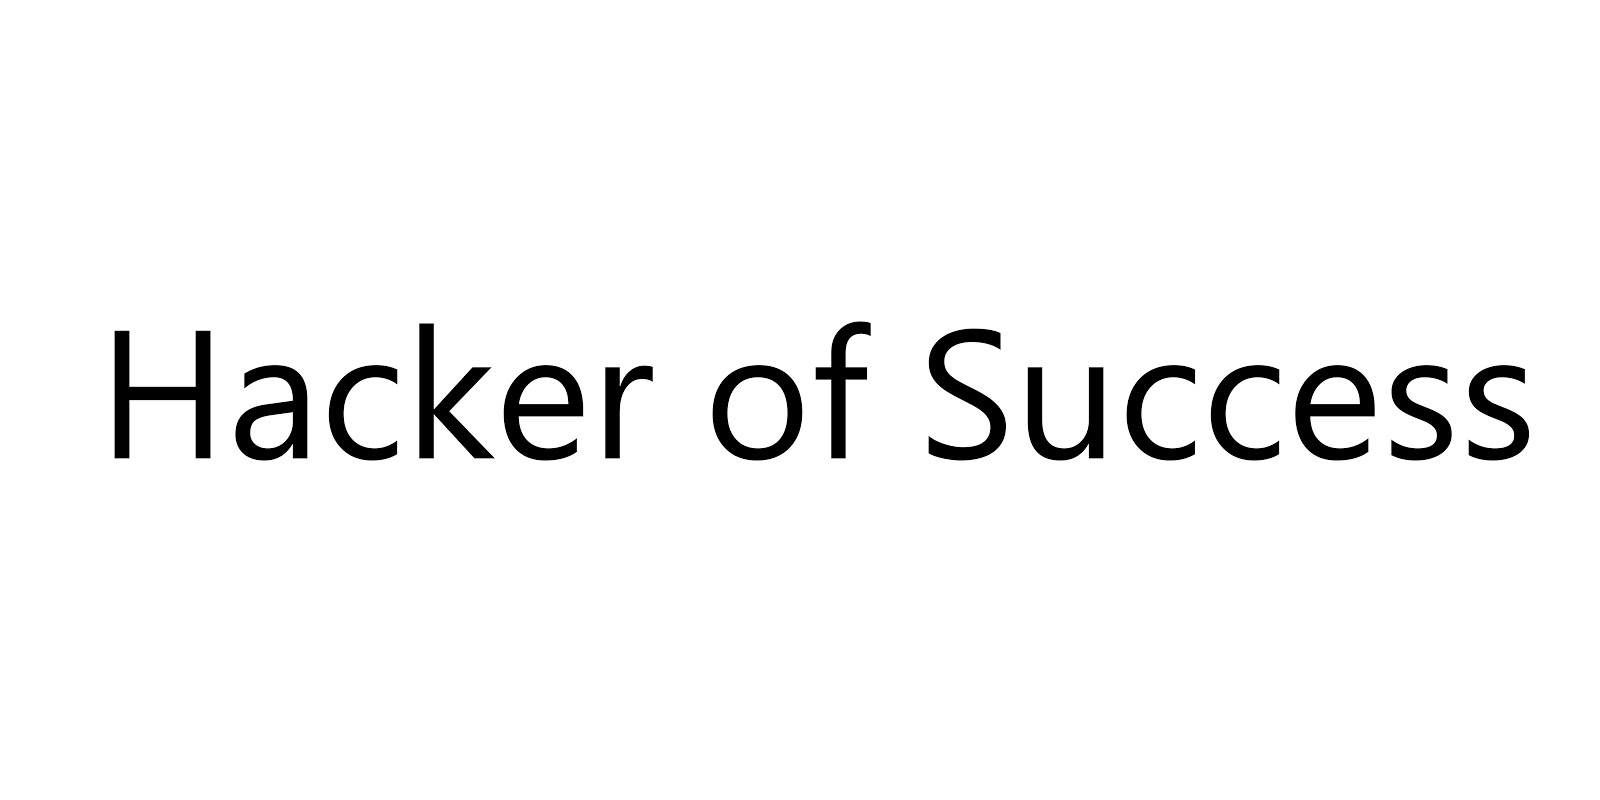 Hacker of success